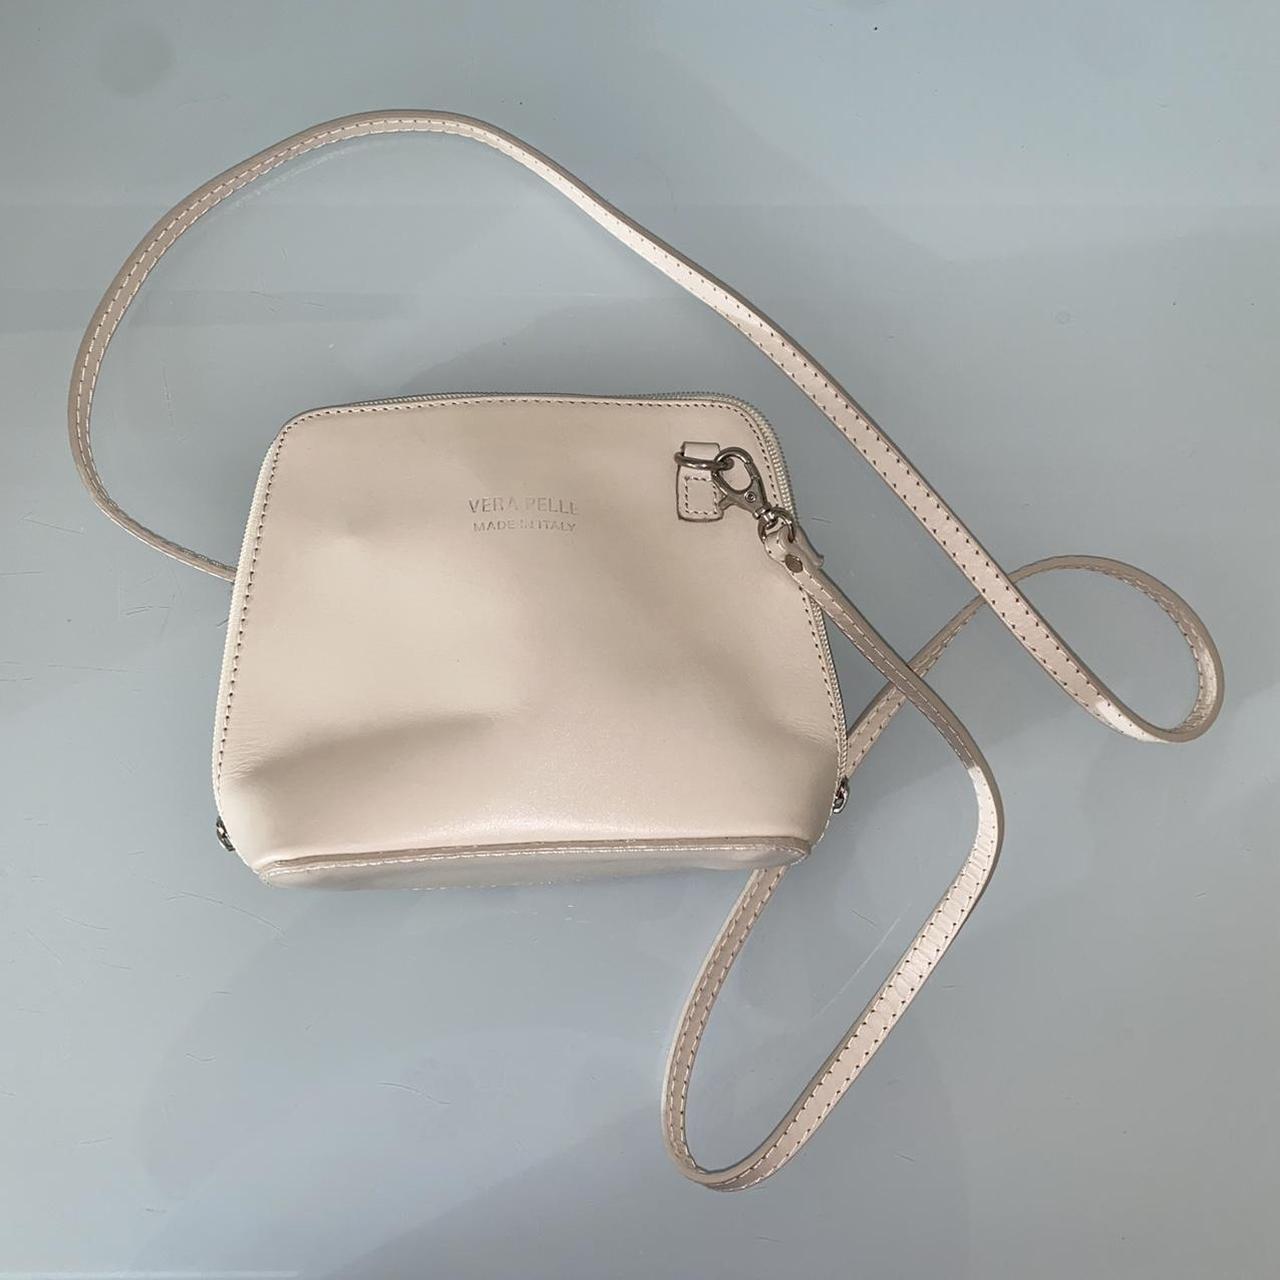 Vera Pelle cream small leather cross body bag. In... - Depop